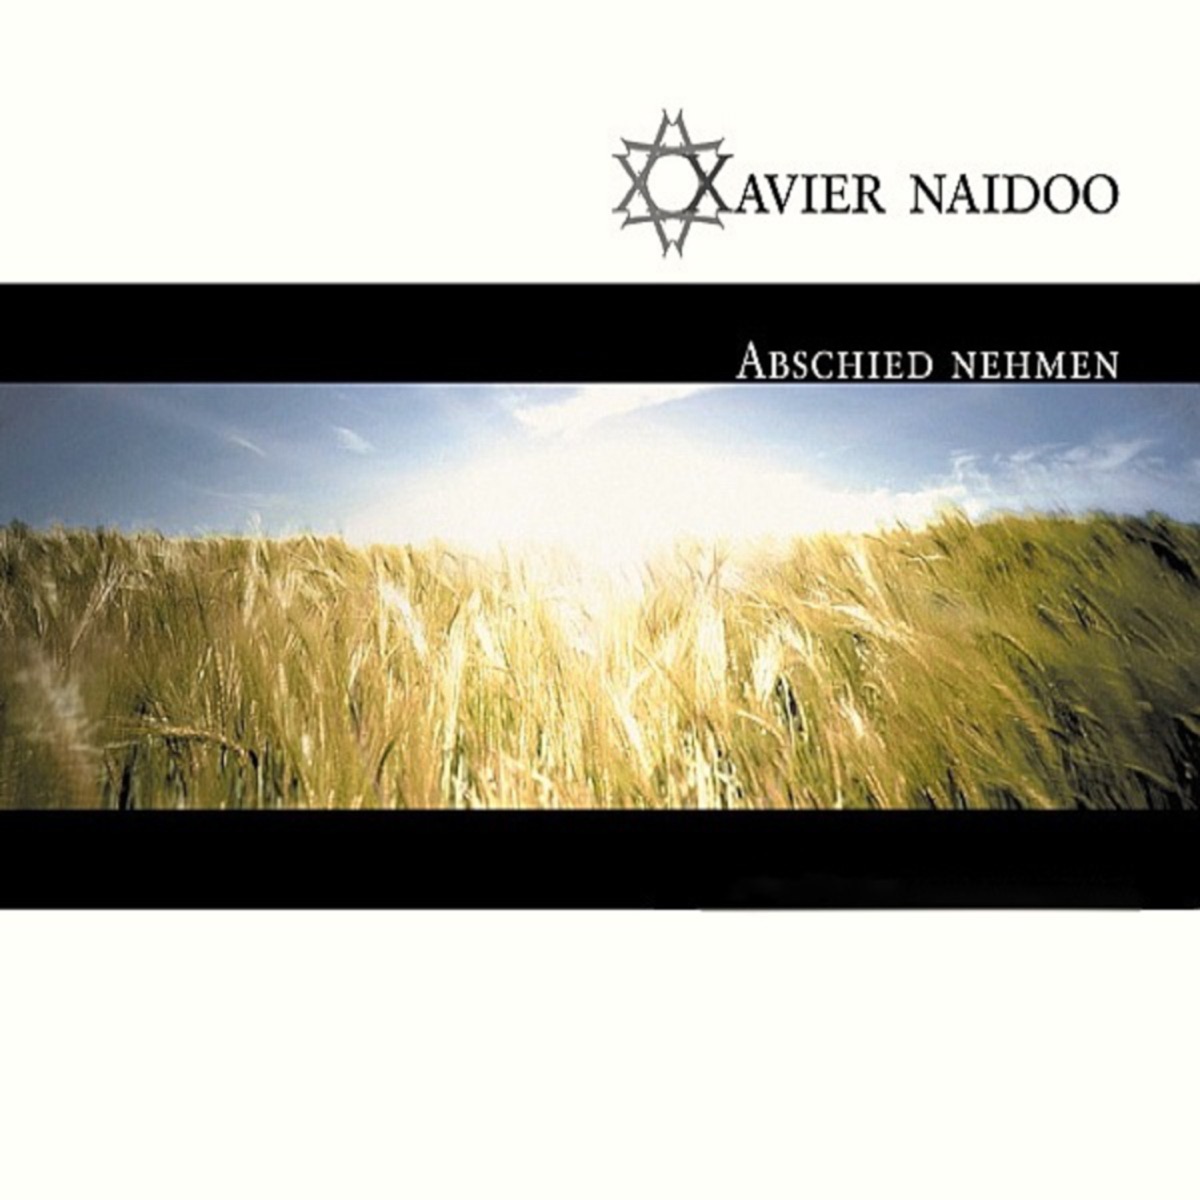 Xavier Naidoo — Abschied nehmen cover artwork